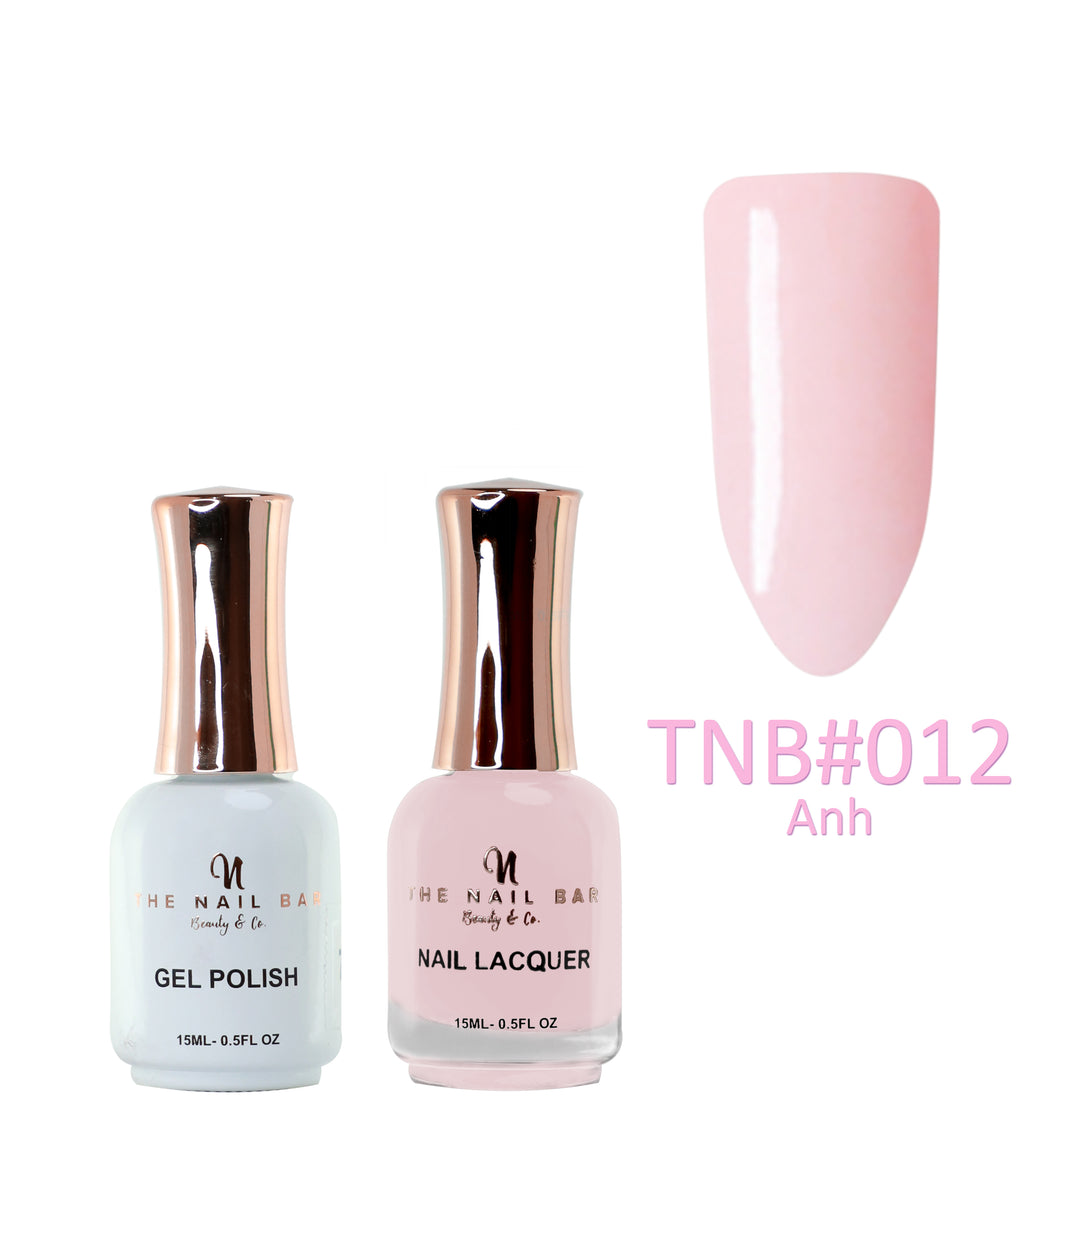 Dual Polish/Gel colour matching (15ml) - Anh - The Nail Bar Beauty & Co.